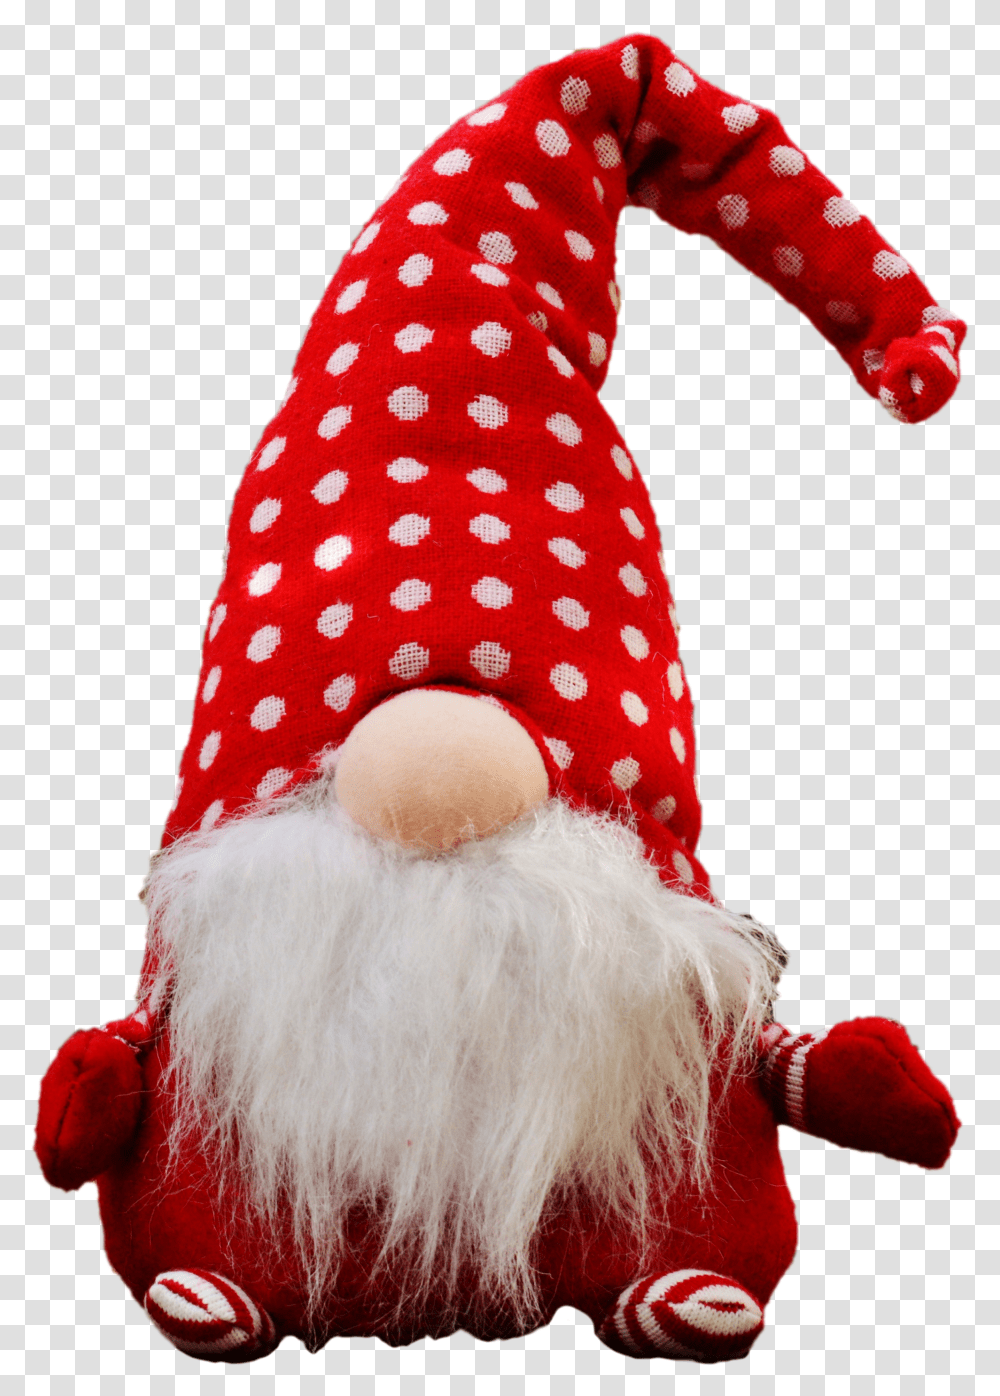 Free Christmas Elf Soft Toy Image Christmas Elf Transparent Png